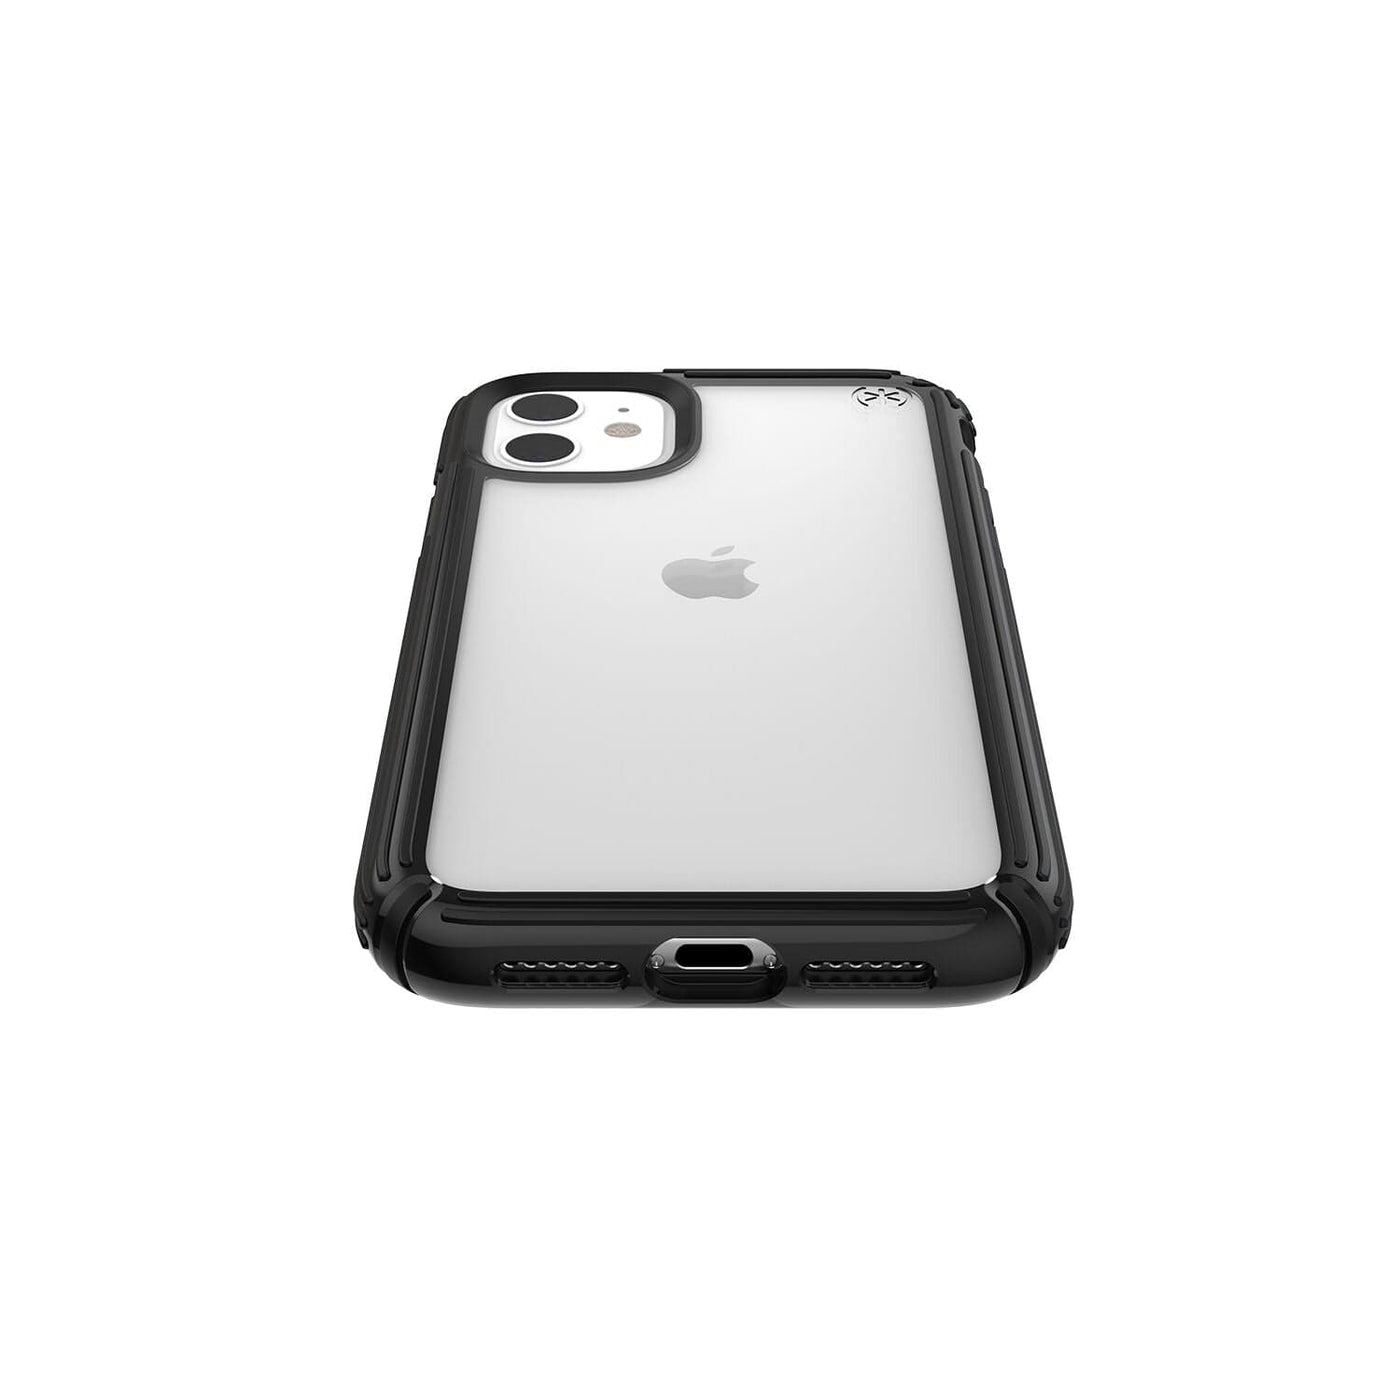 Speck Presidio V-Grip iPhone 11 Pro Cases Best iPhone 11 Pro - $39.99